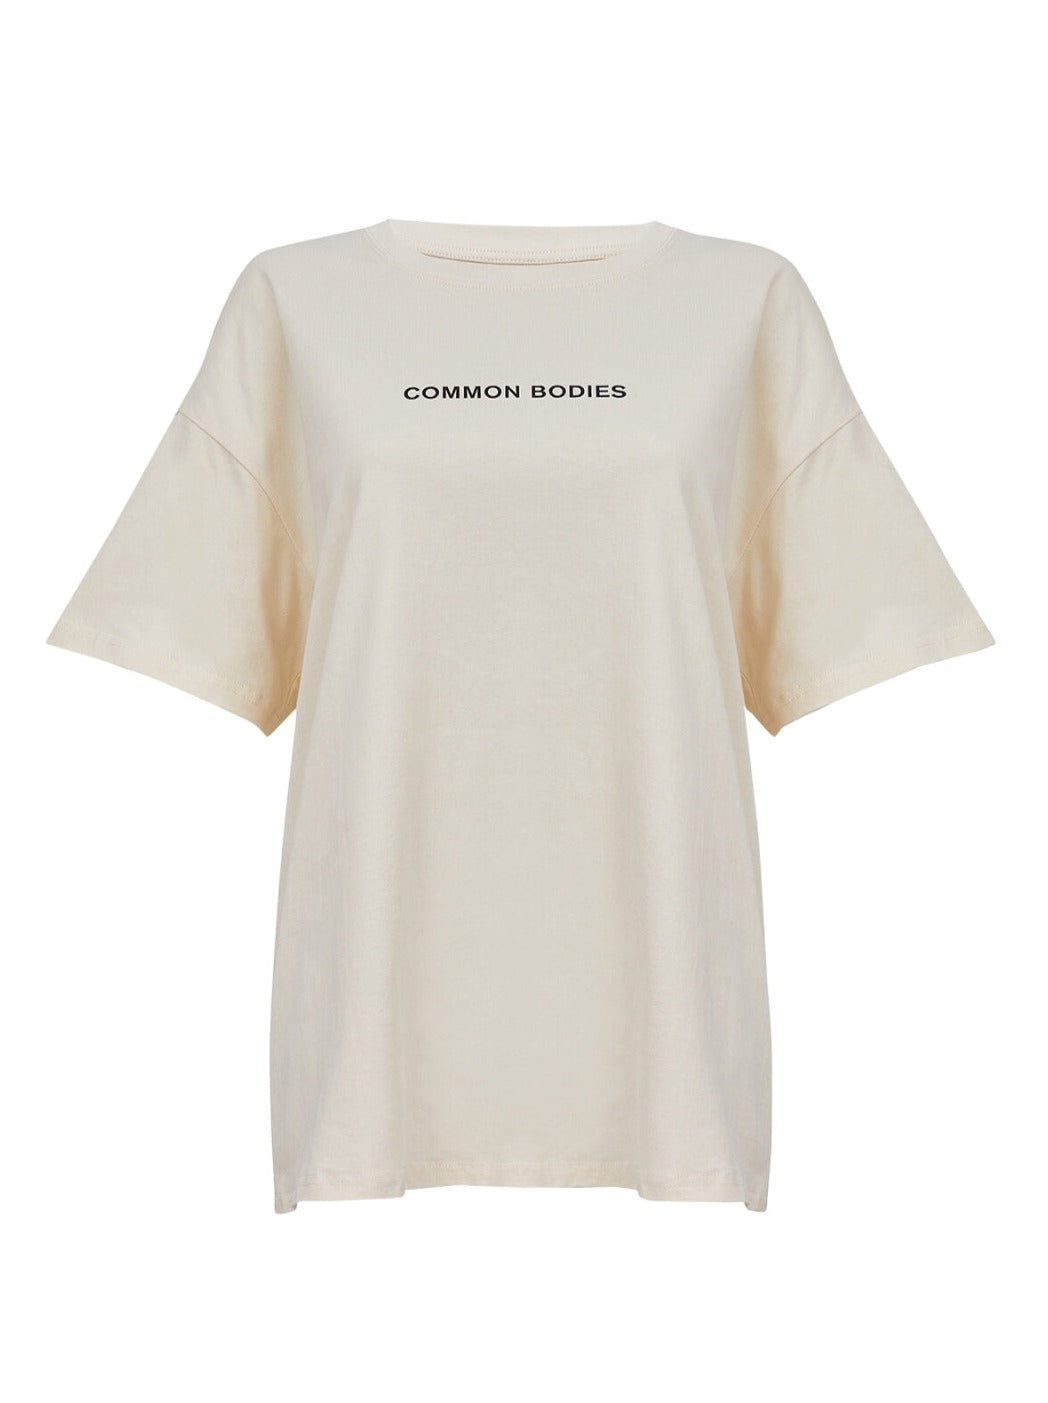 commonbodiesTshirt-front.jpg